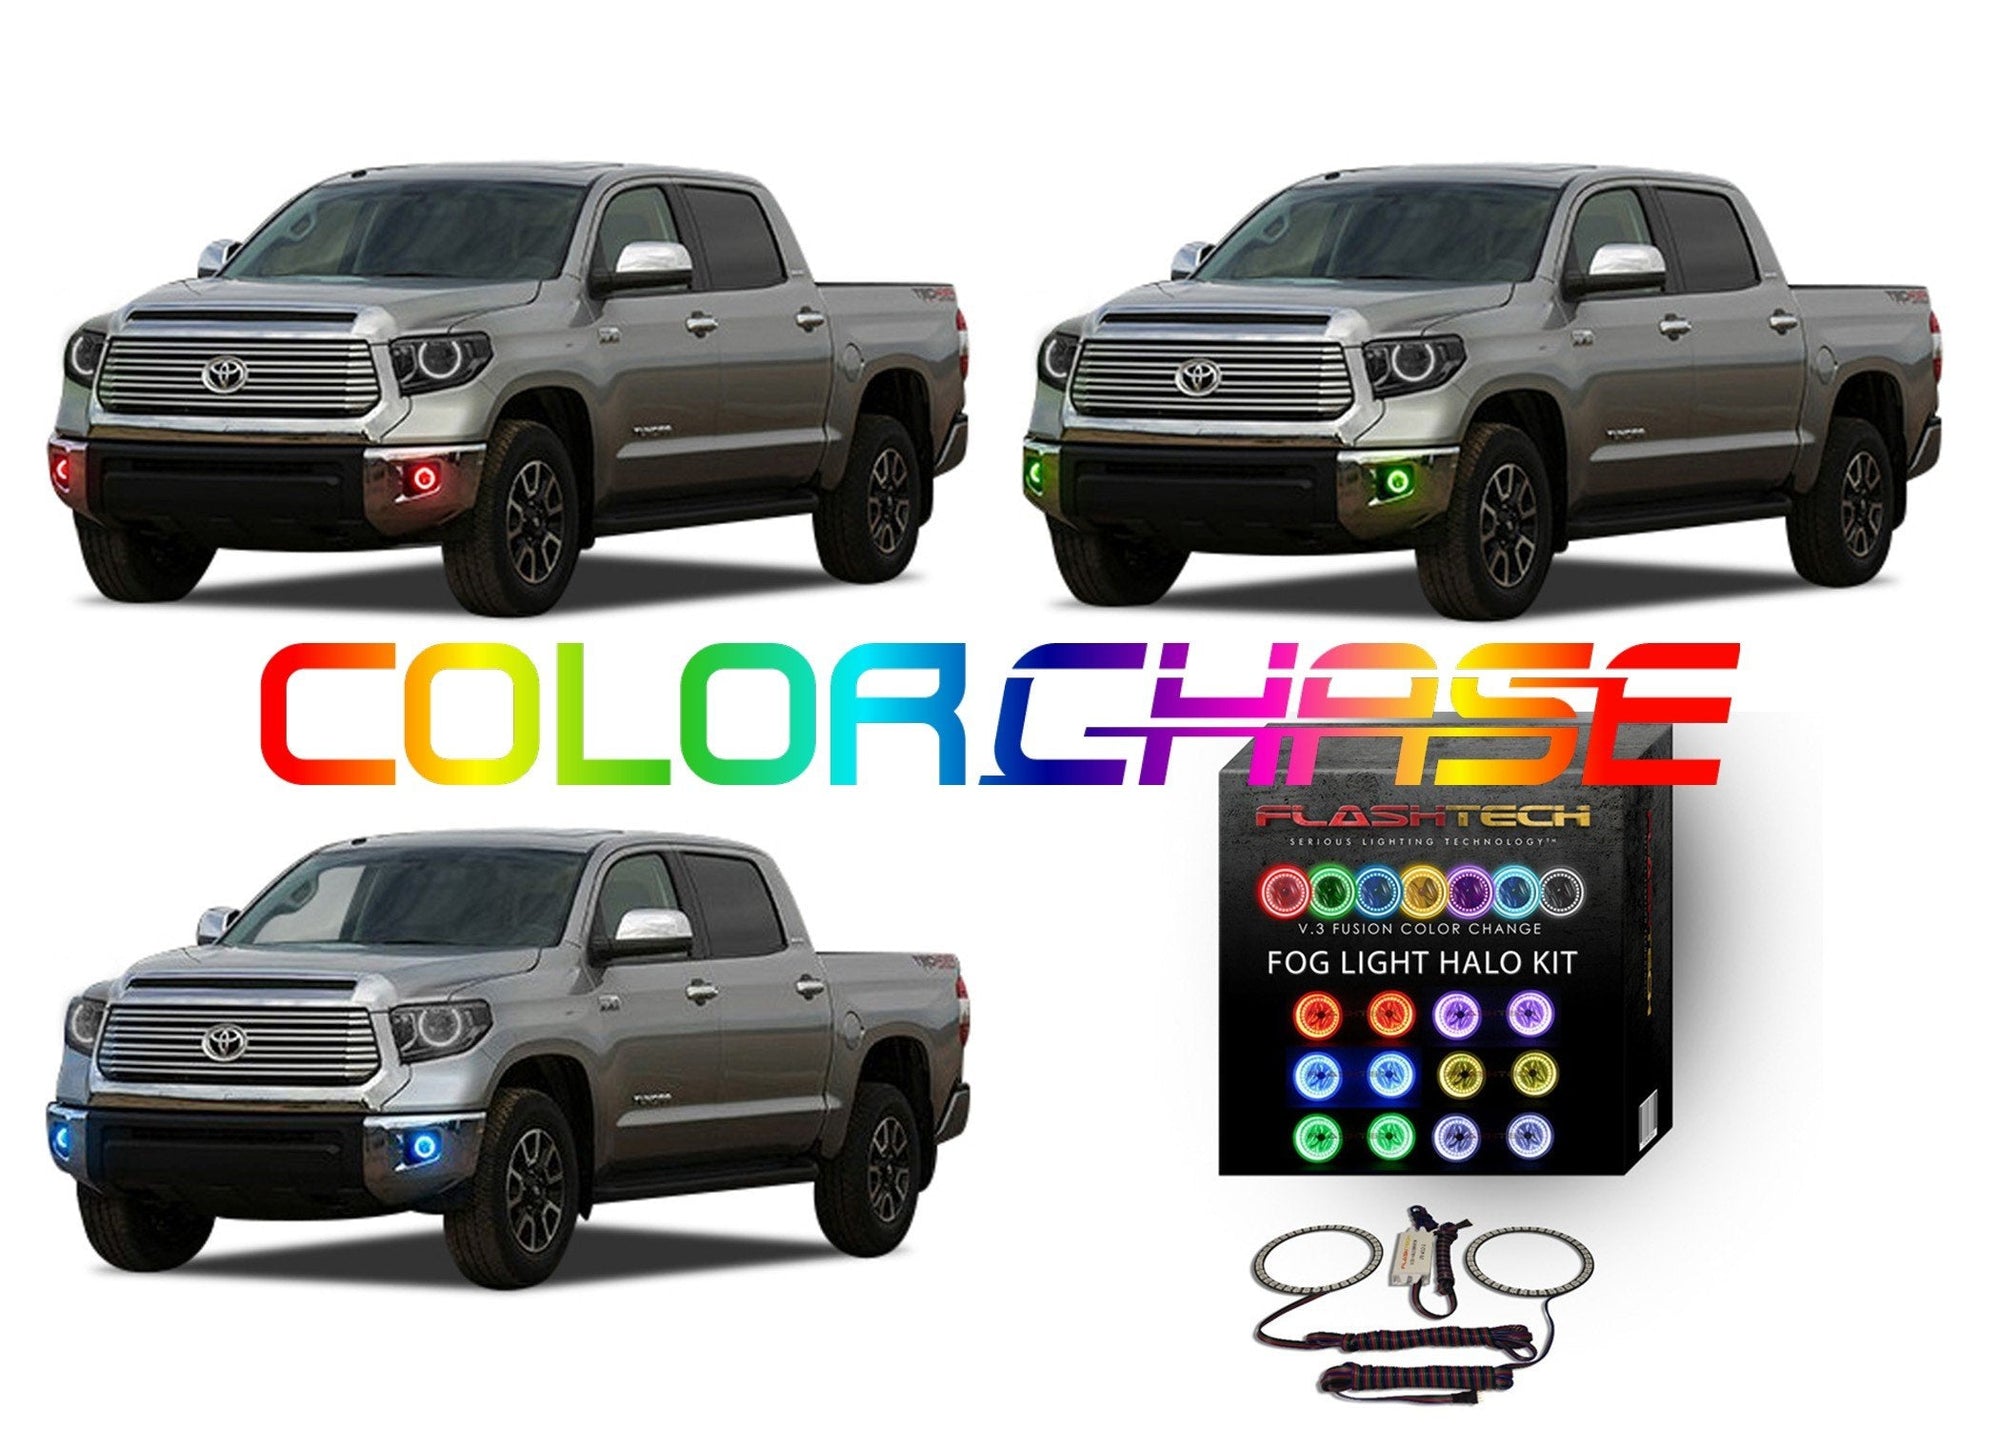 Toyota-Tundra-2014, 2015, 2016-LED-Halo-Fog Lights-ColorChase-No Remote-TO-TU1415-CCF